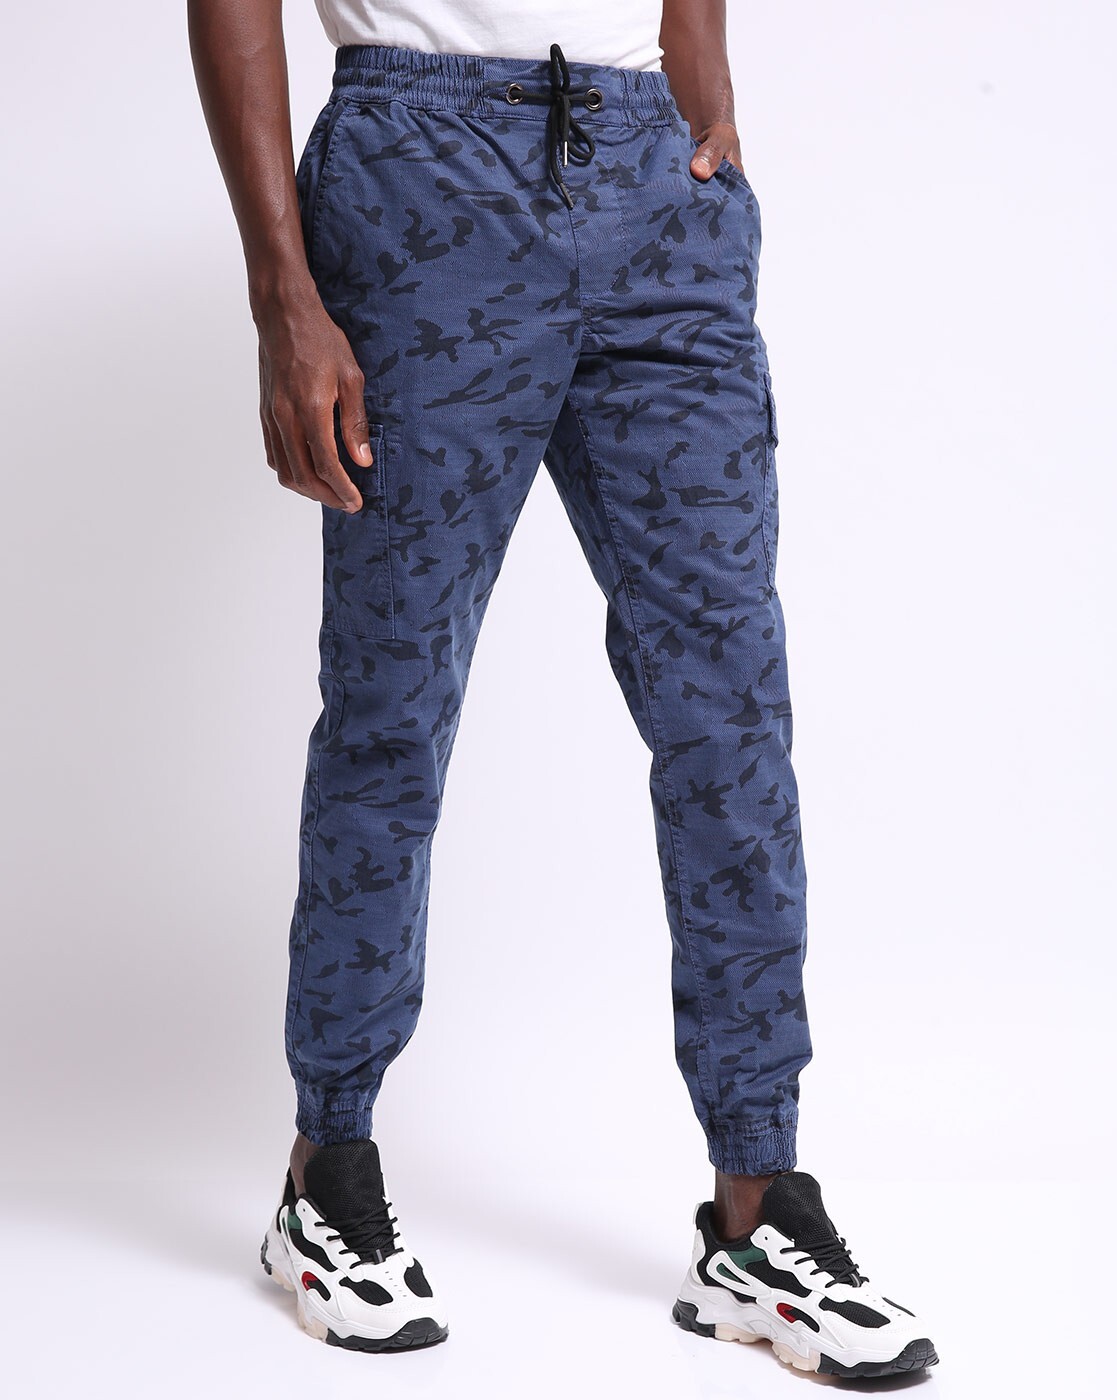 V.I.P. JEANS Cargo Pants for Women Juniors Sizes Solids, Baggy Blue Camo  Belt, 14 Plus at Amazon Women's Jeans store